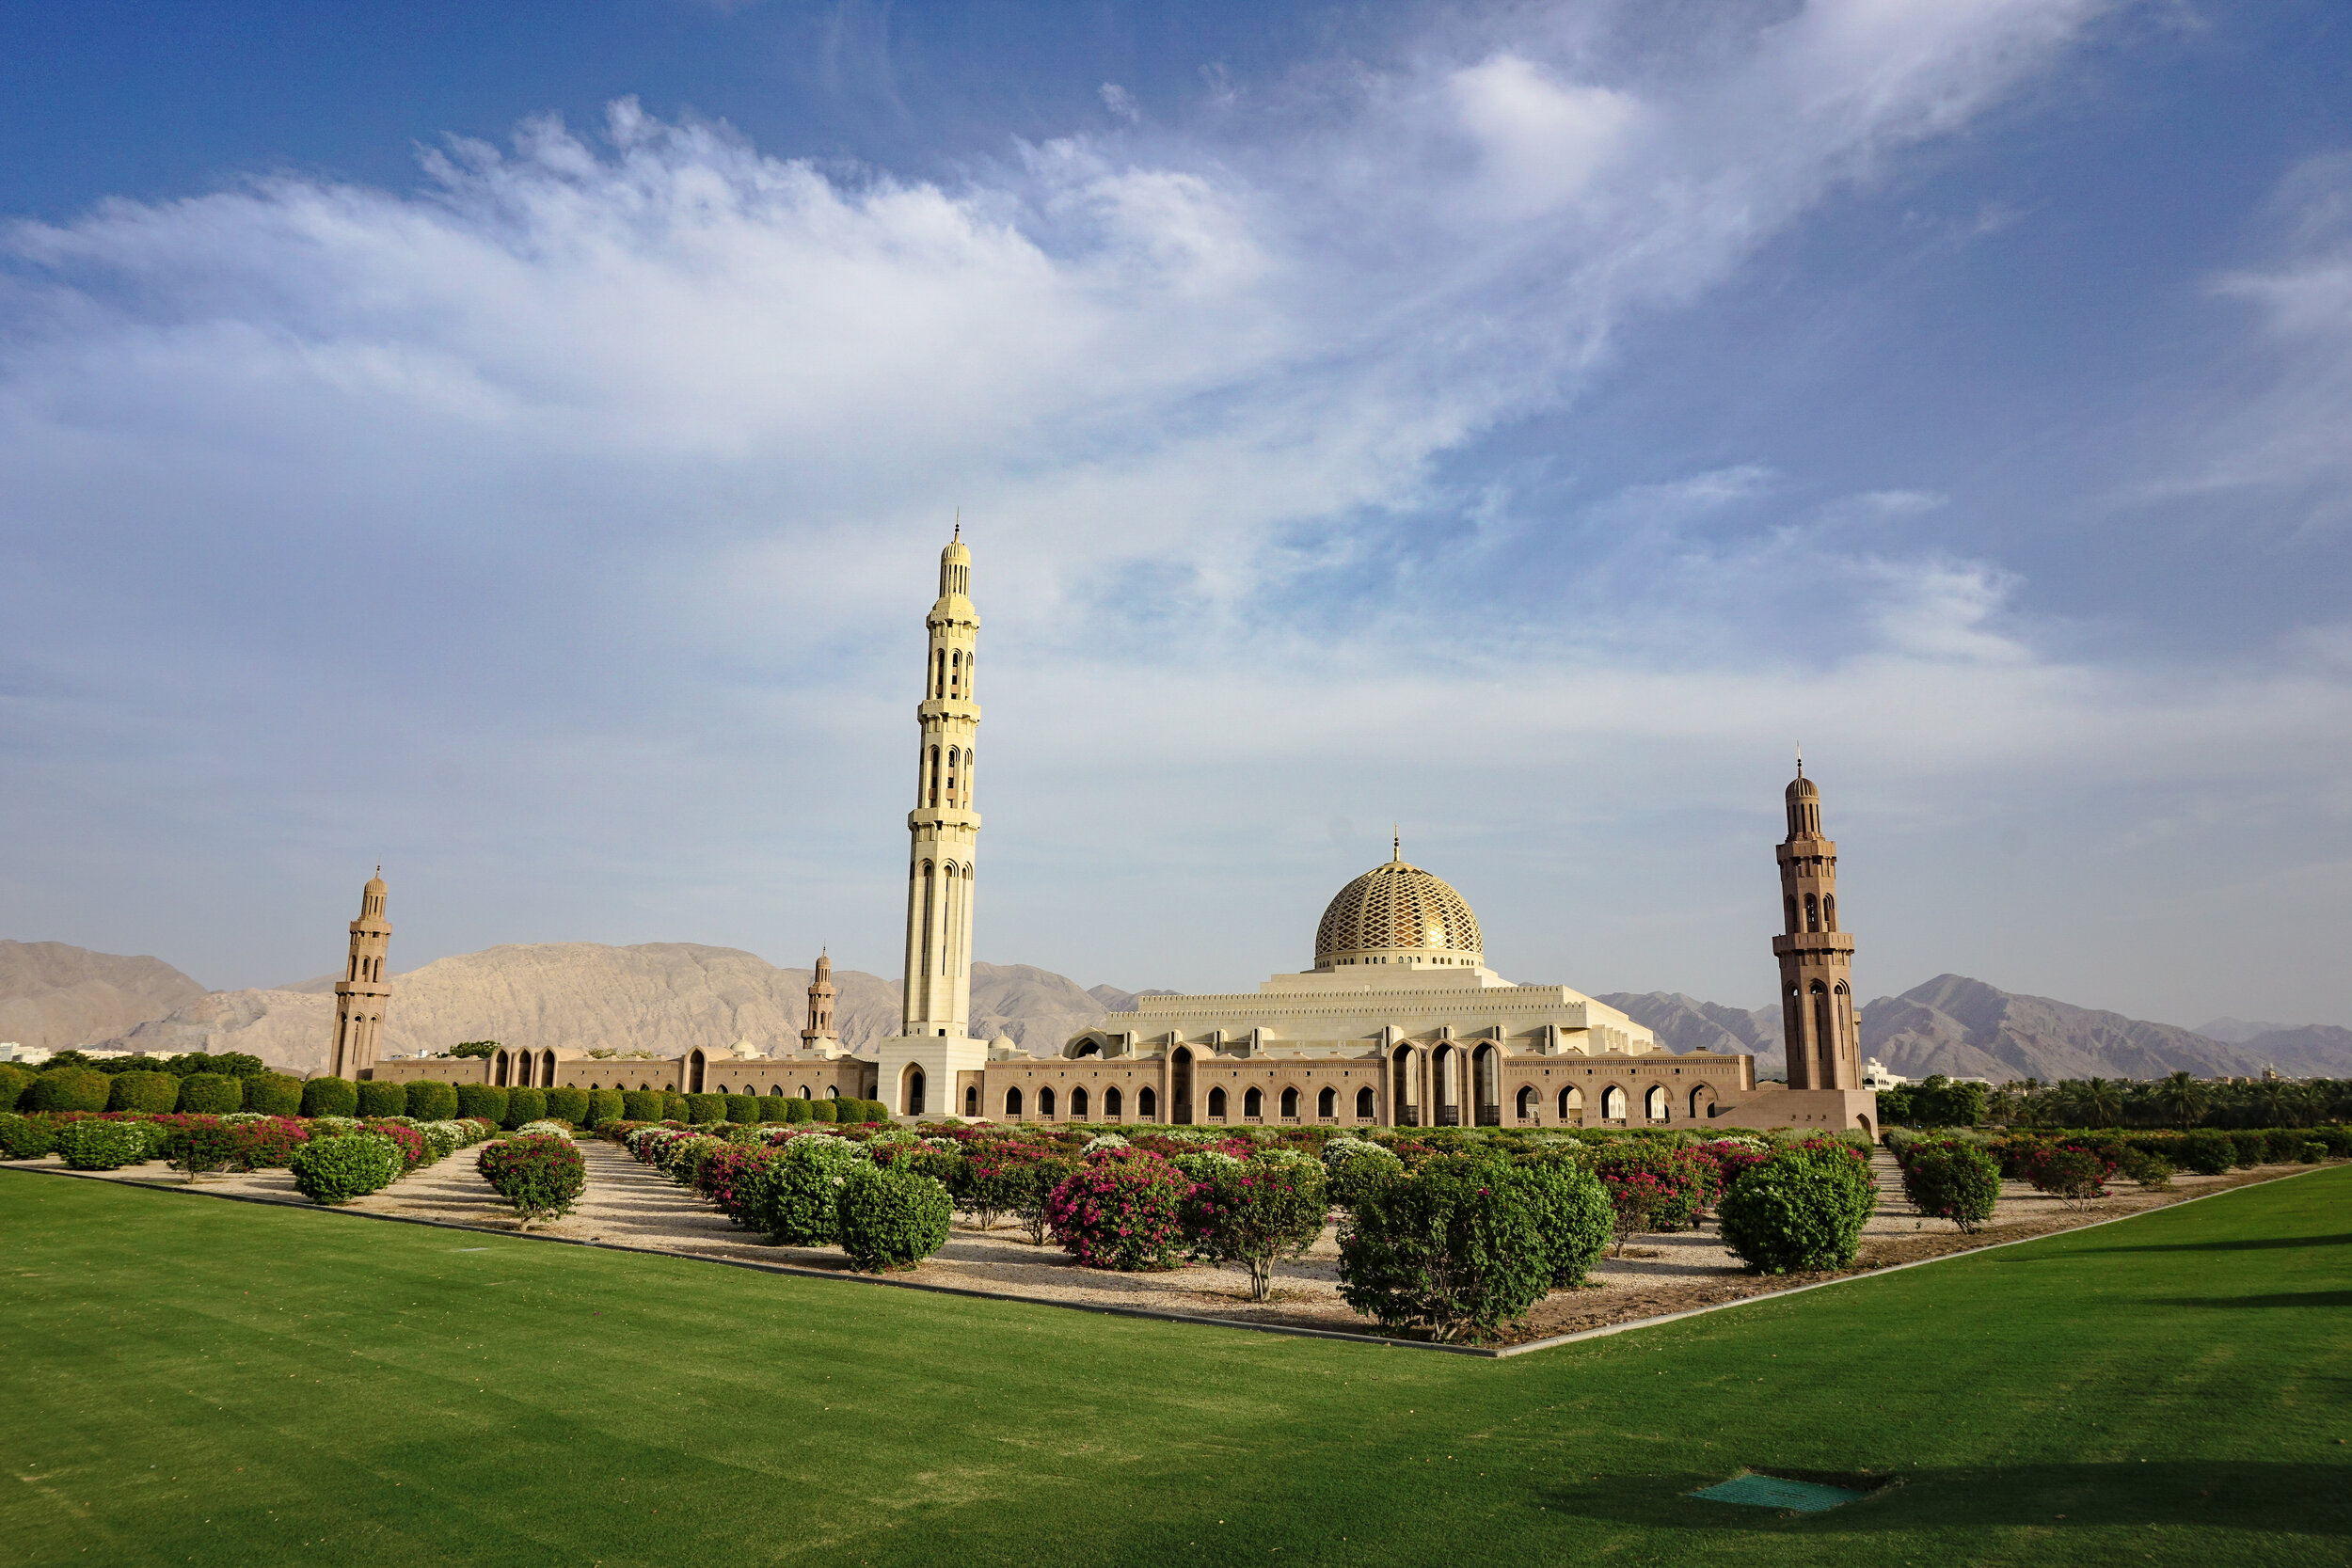 Pristine-Sultan-Qaboos-Grand-Mosque-beautiful-landscaping.jpg